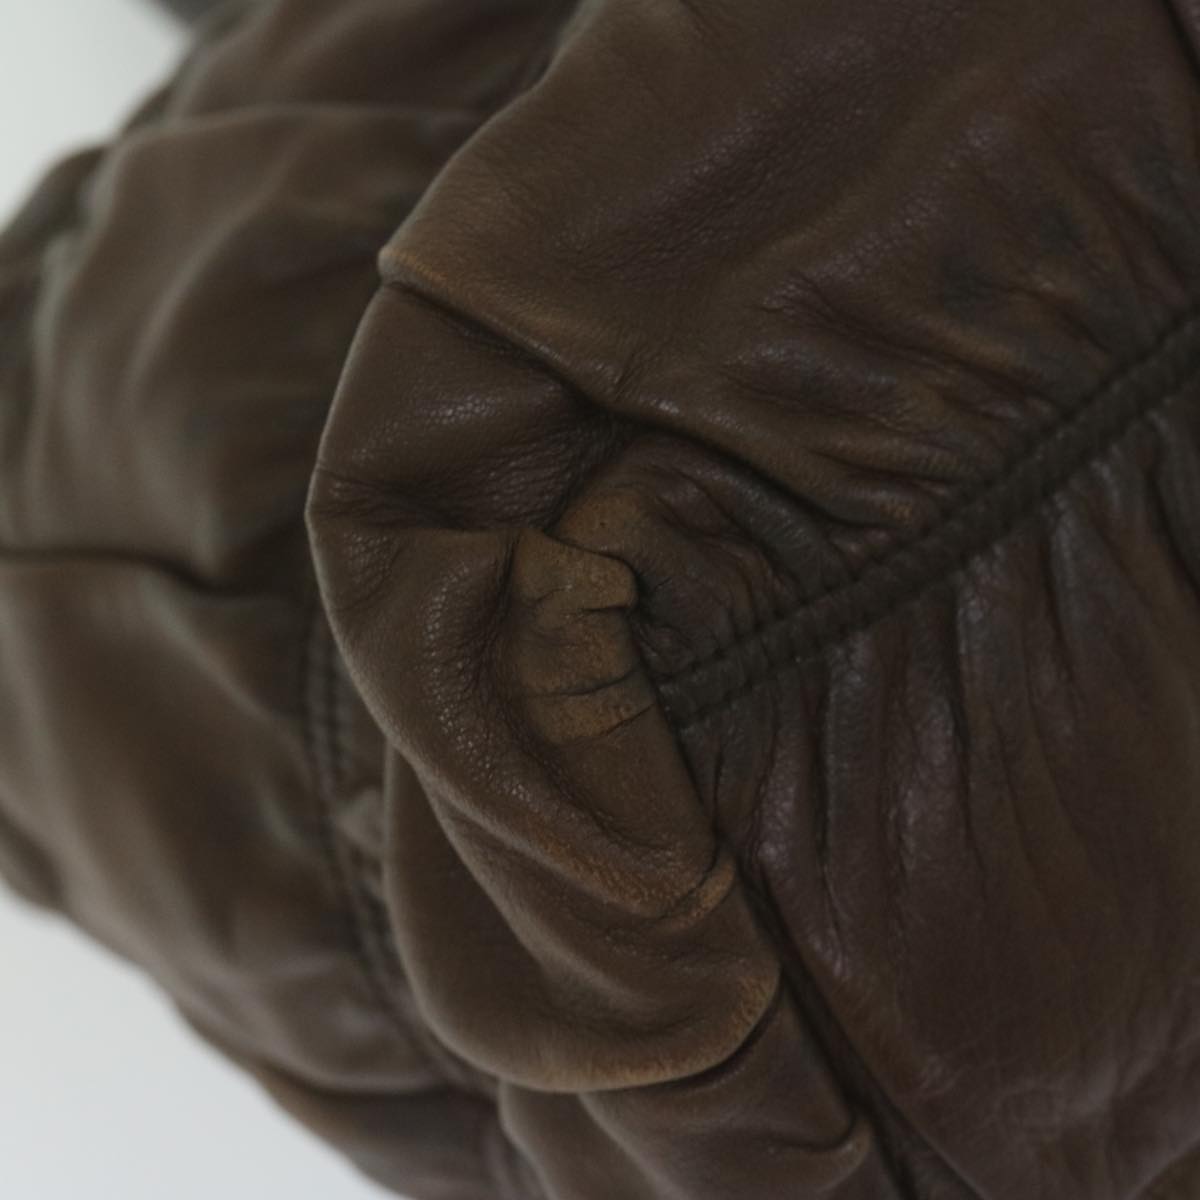 PRADA Hand Bag Leather Brown Auth bs11123